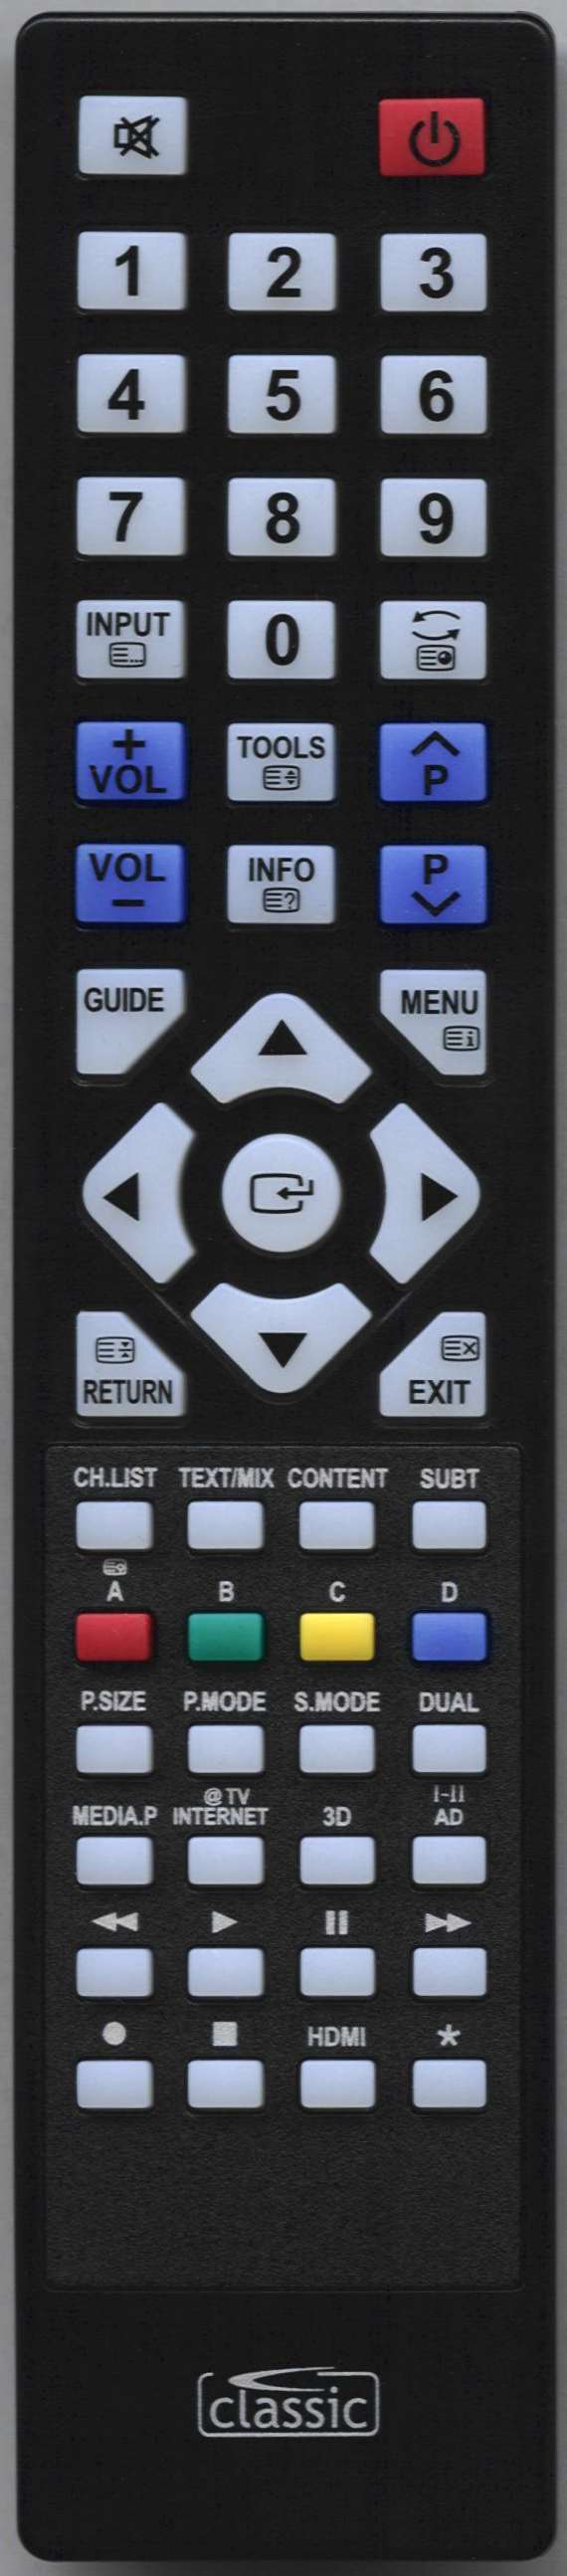 SAMSUNG PS58C6500TWXRU Remote Control